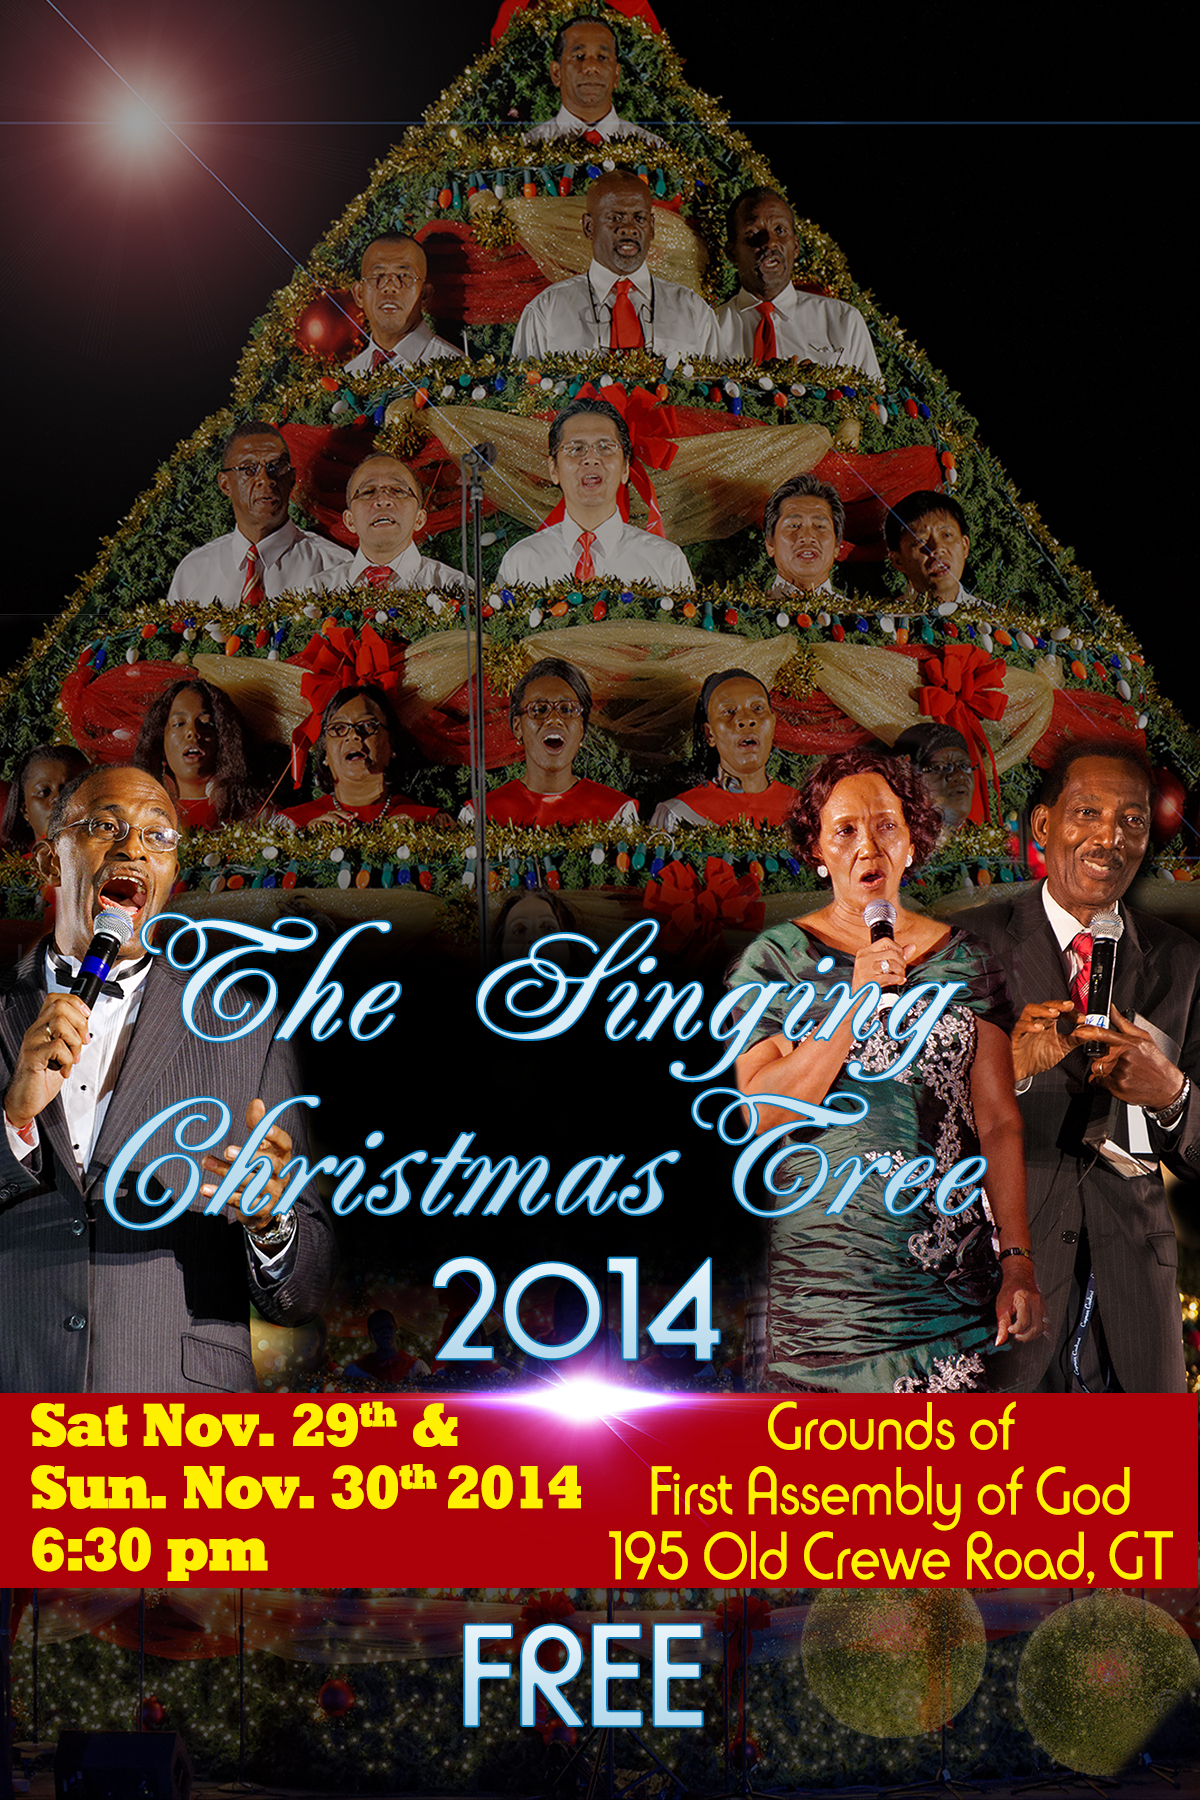 The Singing Christmas Tree 2014